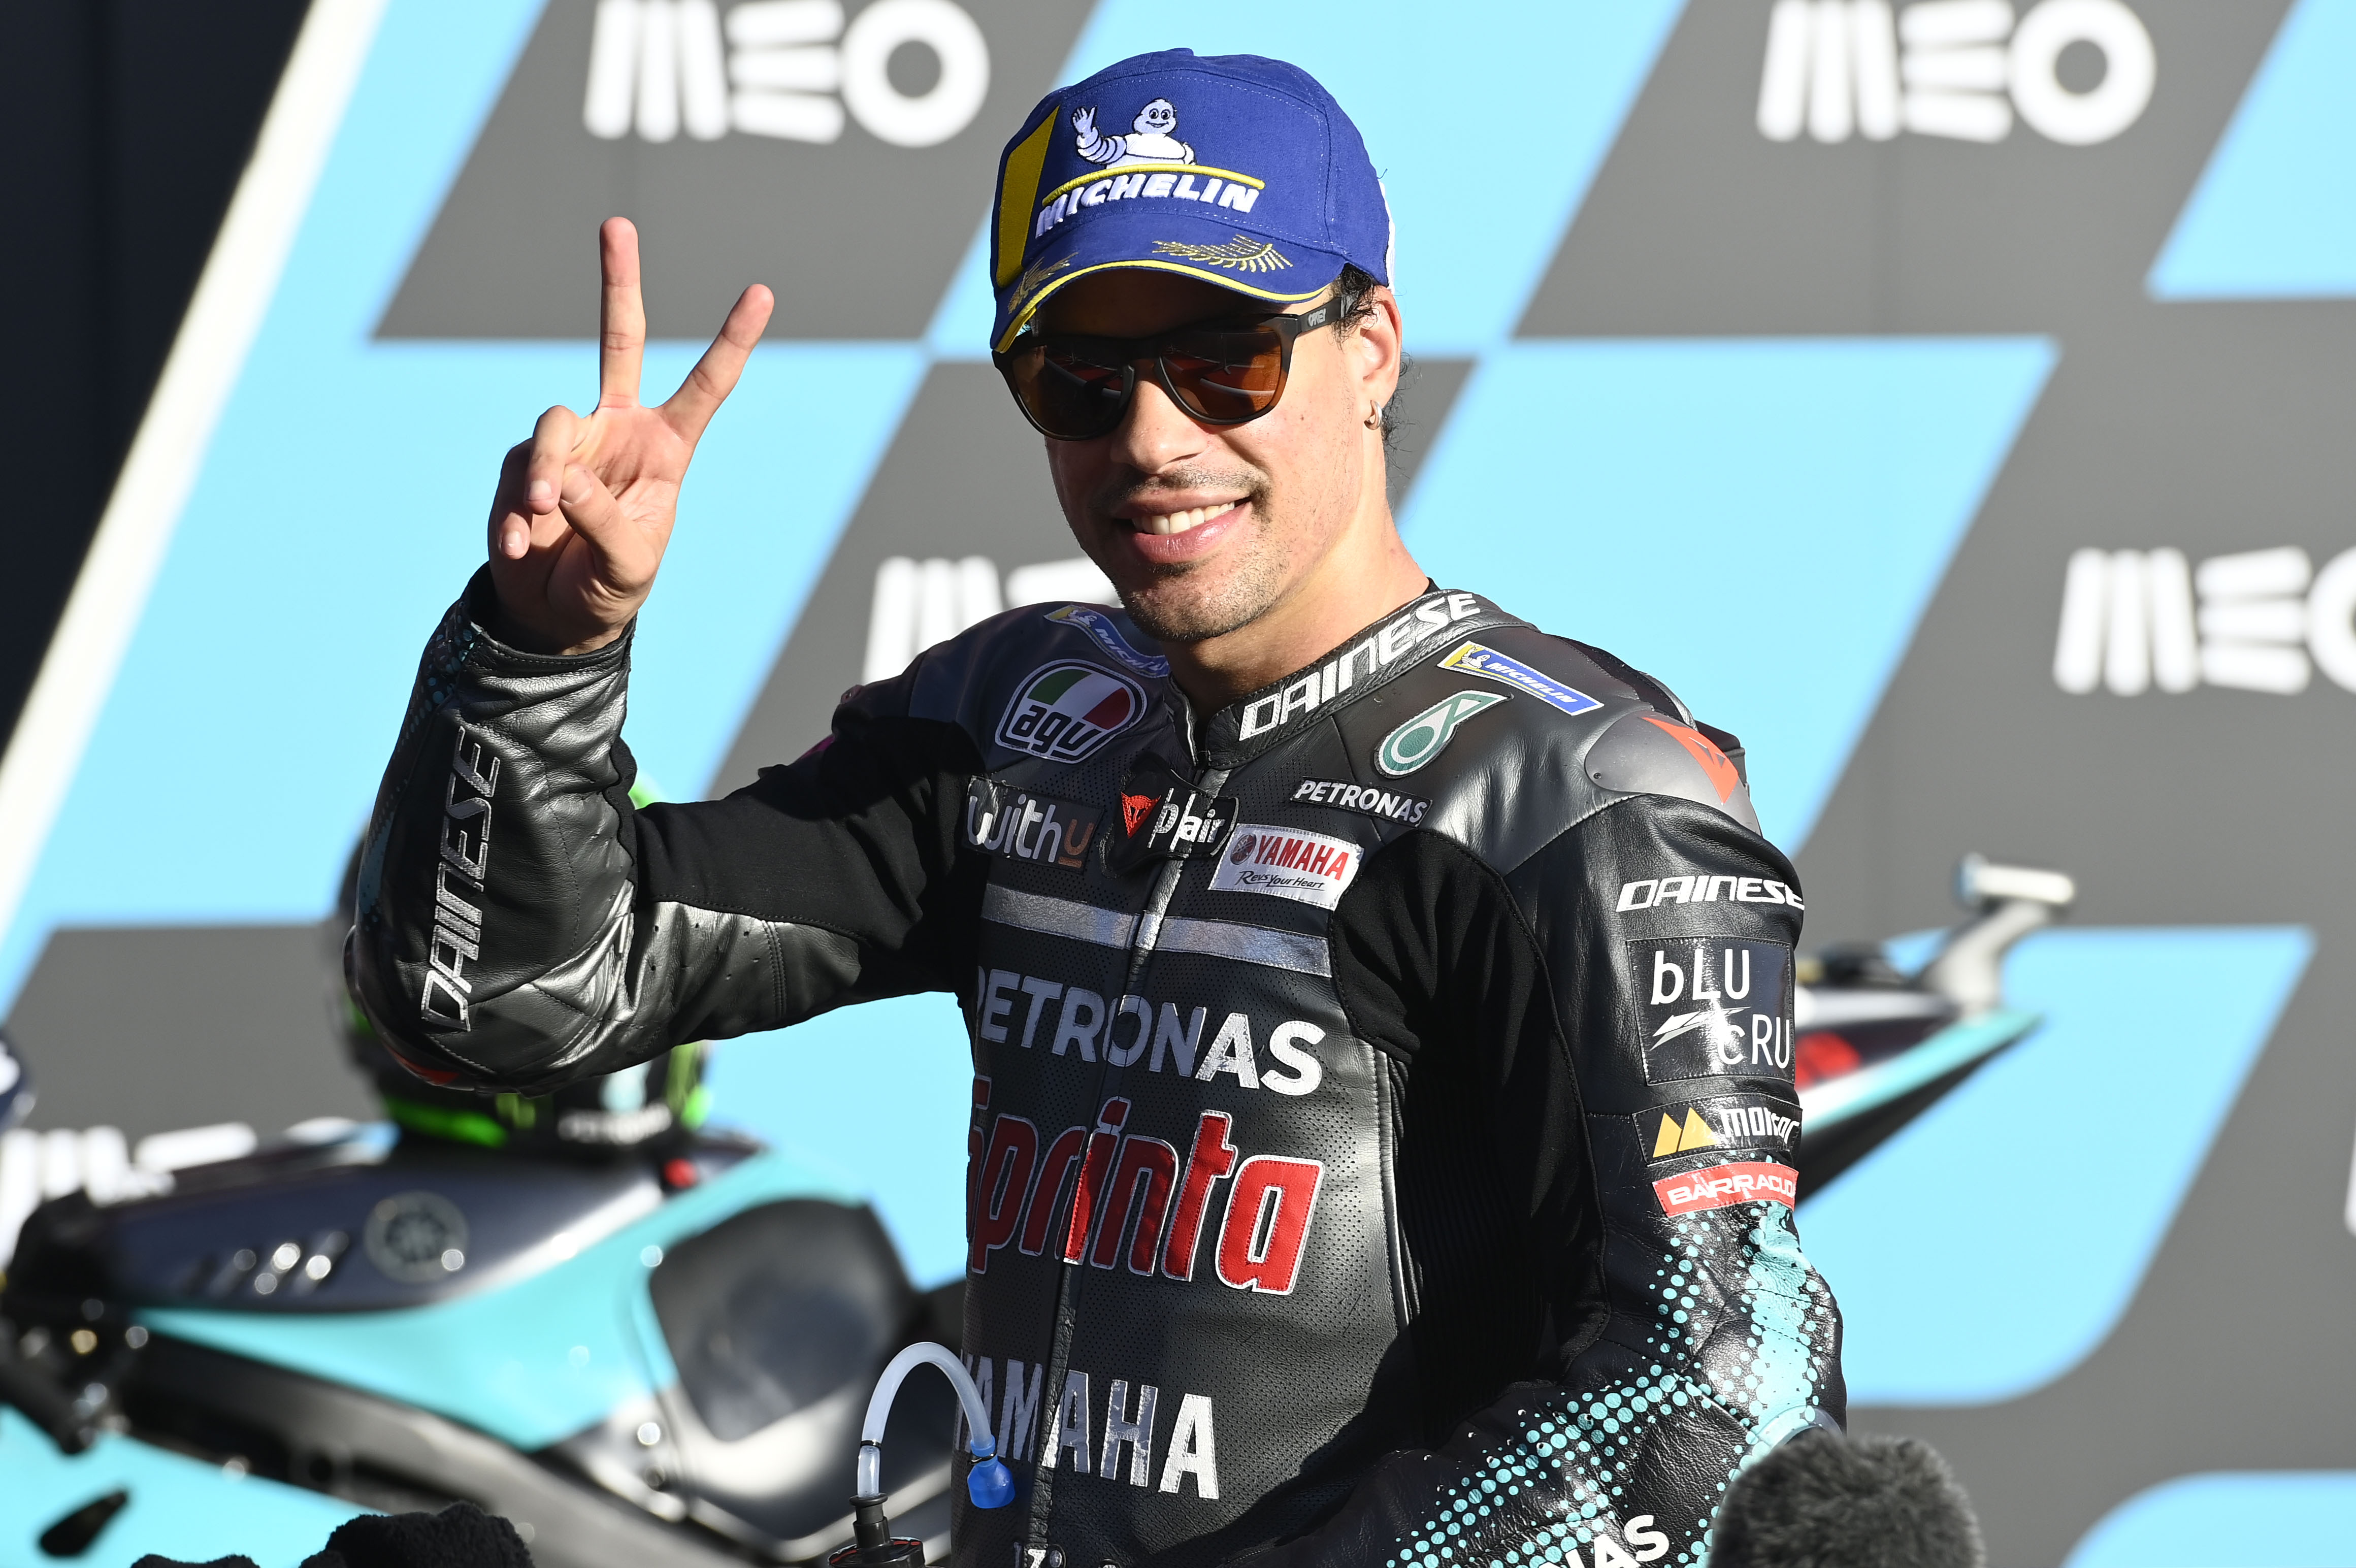 Is Yamaha’s 2021 title bid already doomed? Our verdicts - The Race